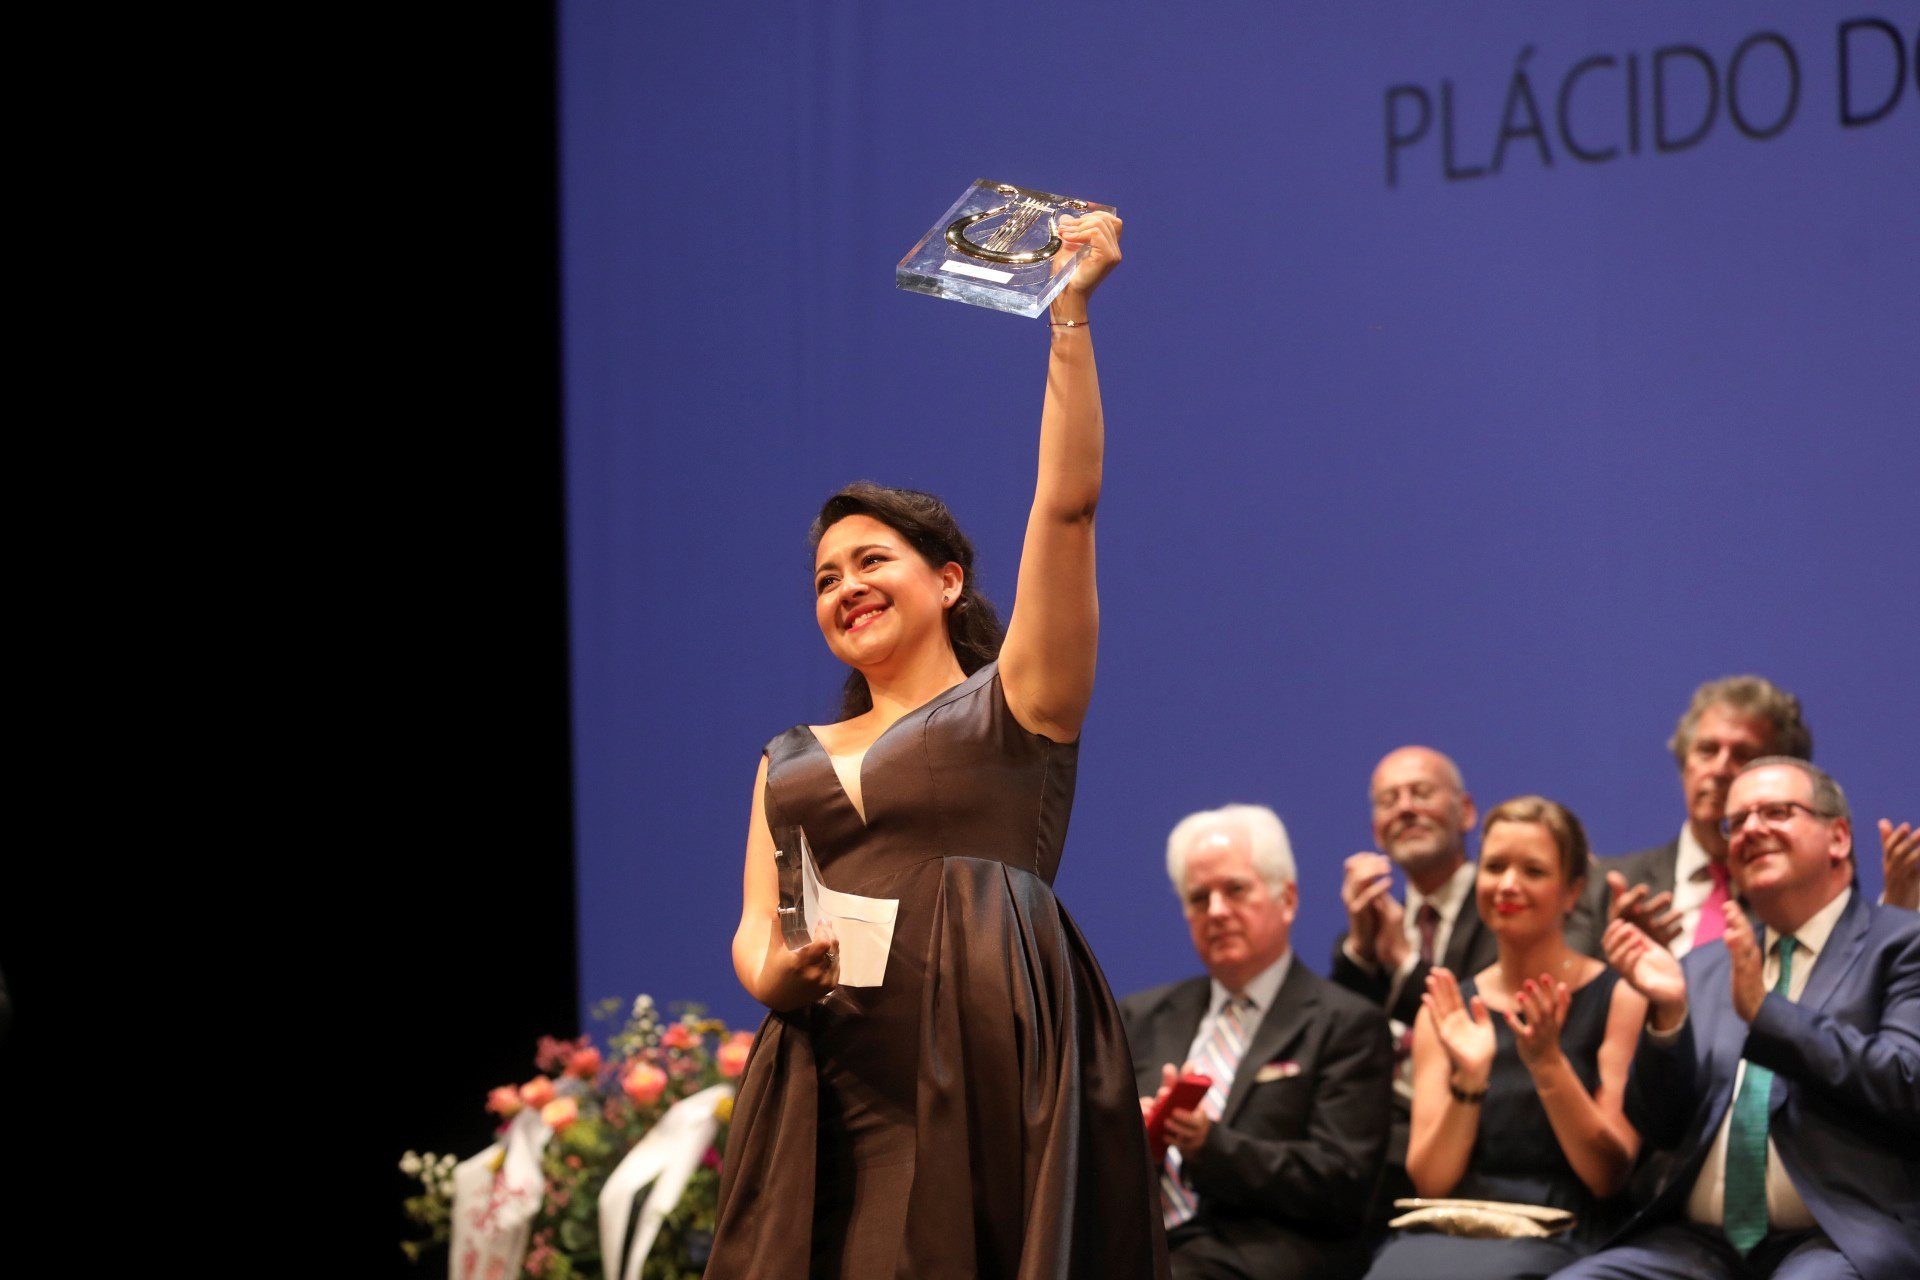 Adriana Gonzalez levantando un premio